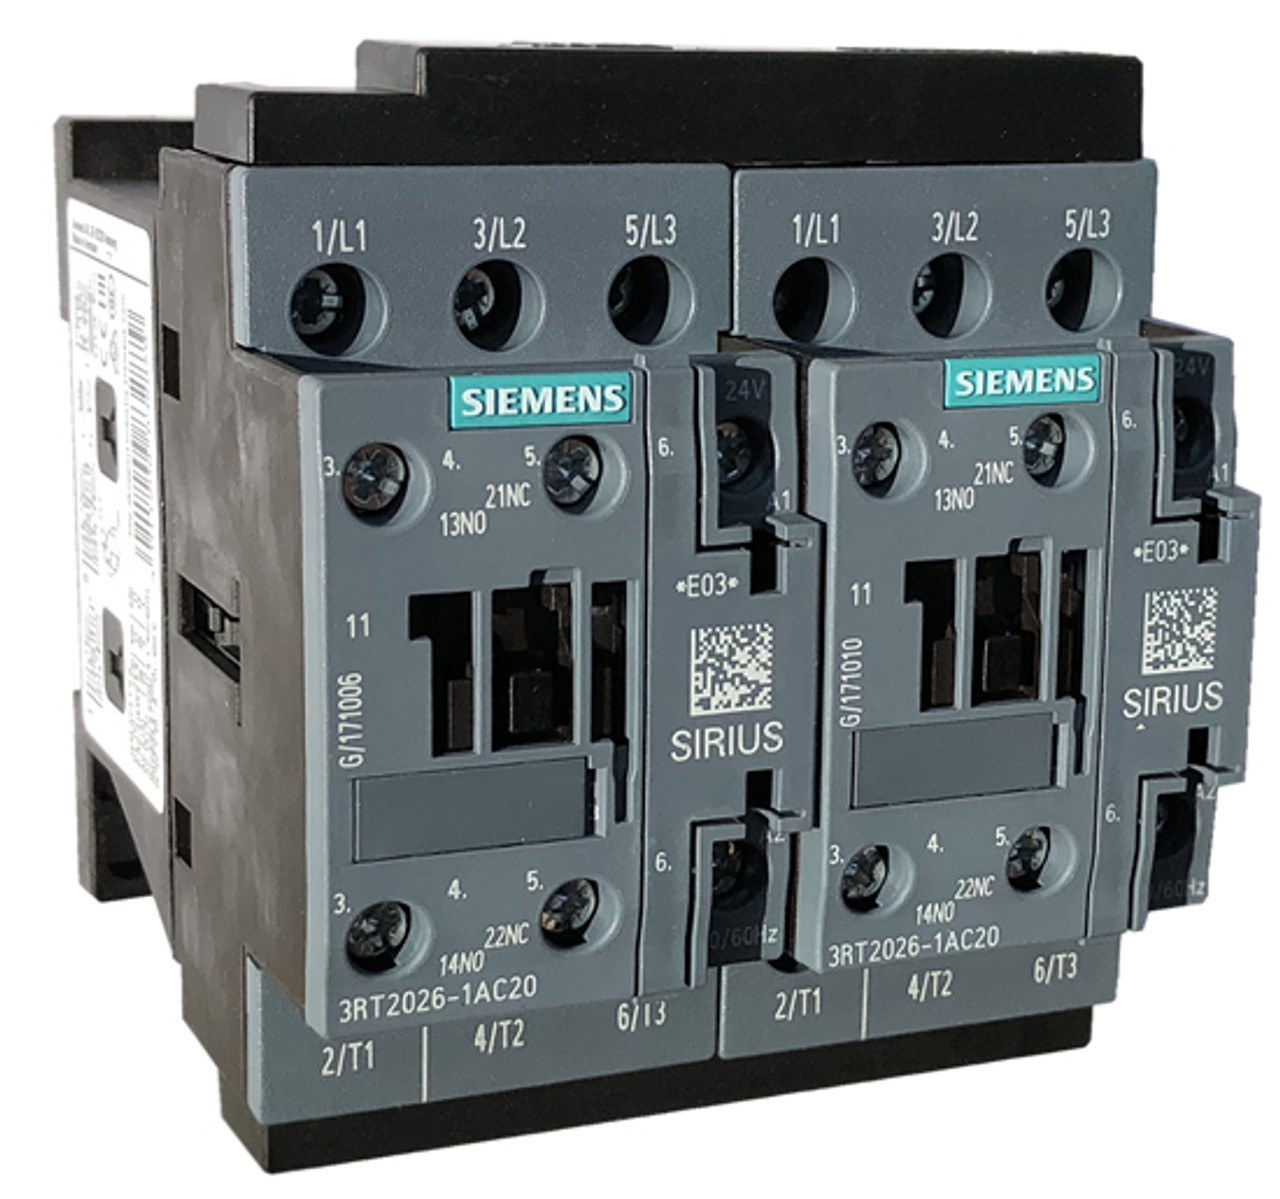 Siemens 3RA2326-8XB30-1AD0 reversing contactor